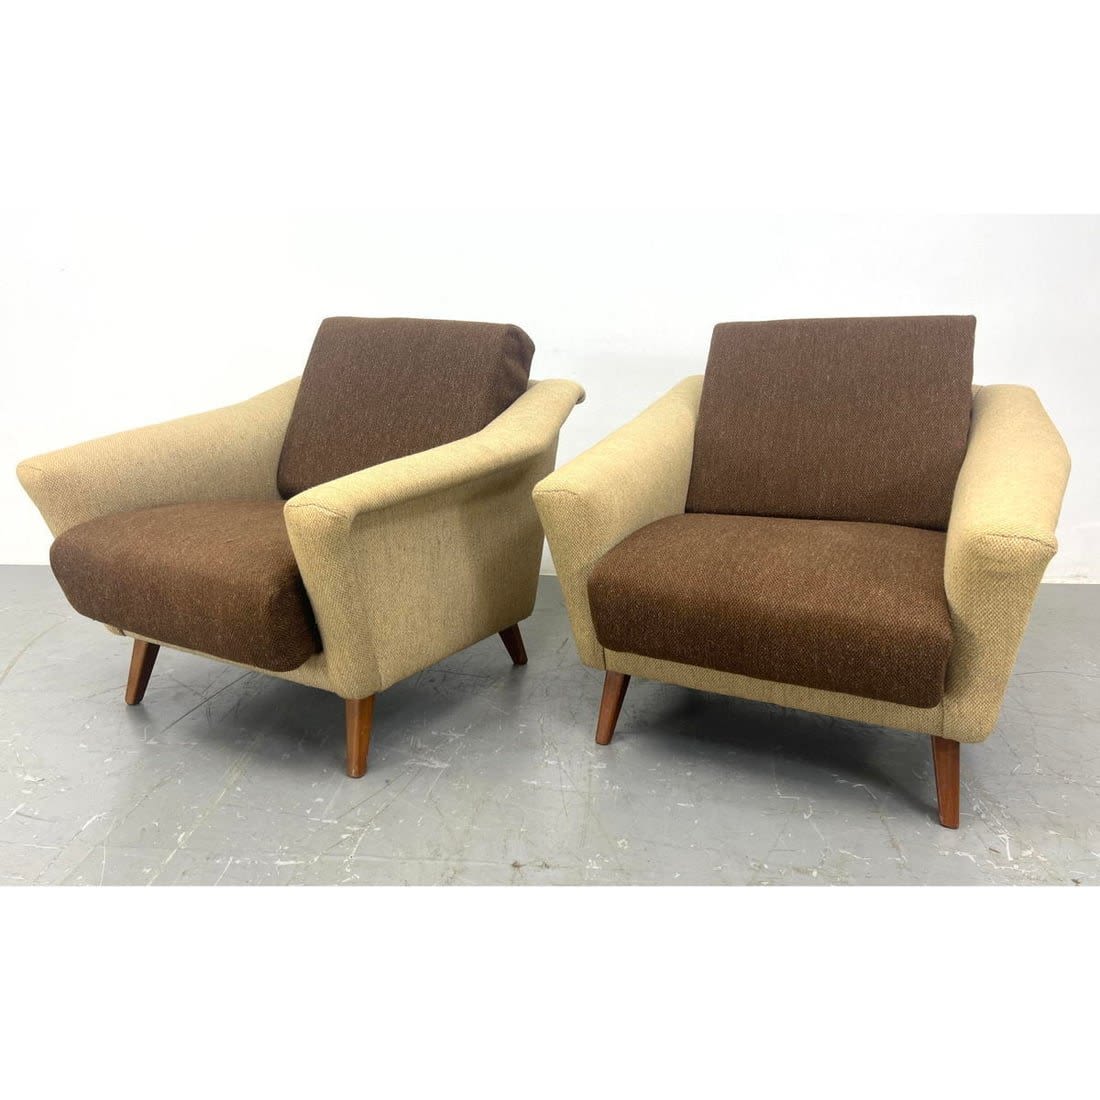 Pr Italian Mid Century Lounge Chairs  362a9e